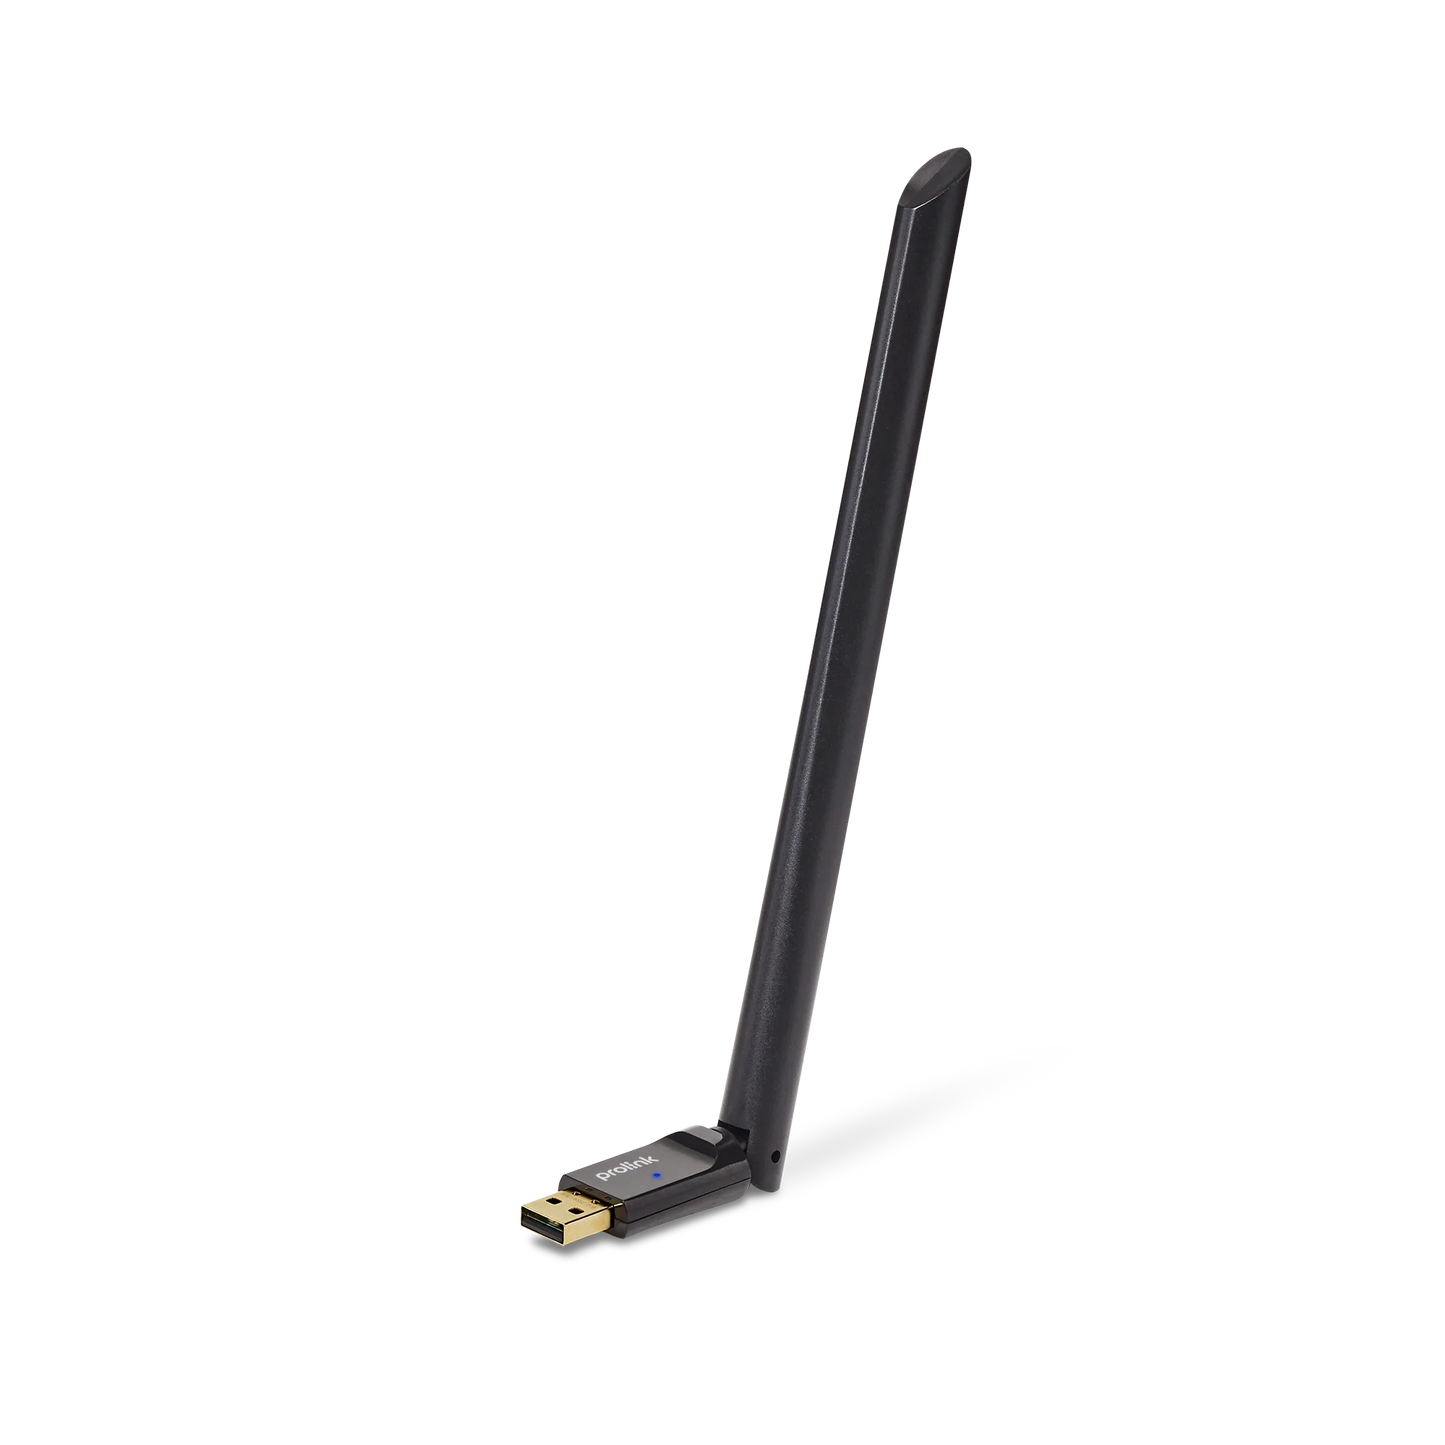 AC650 Wireless USB Adapter 6dBi Antenna